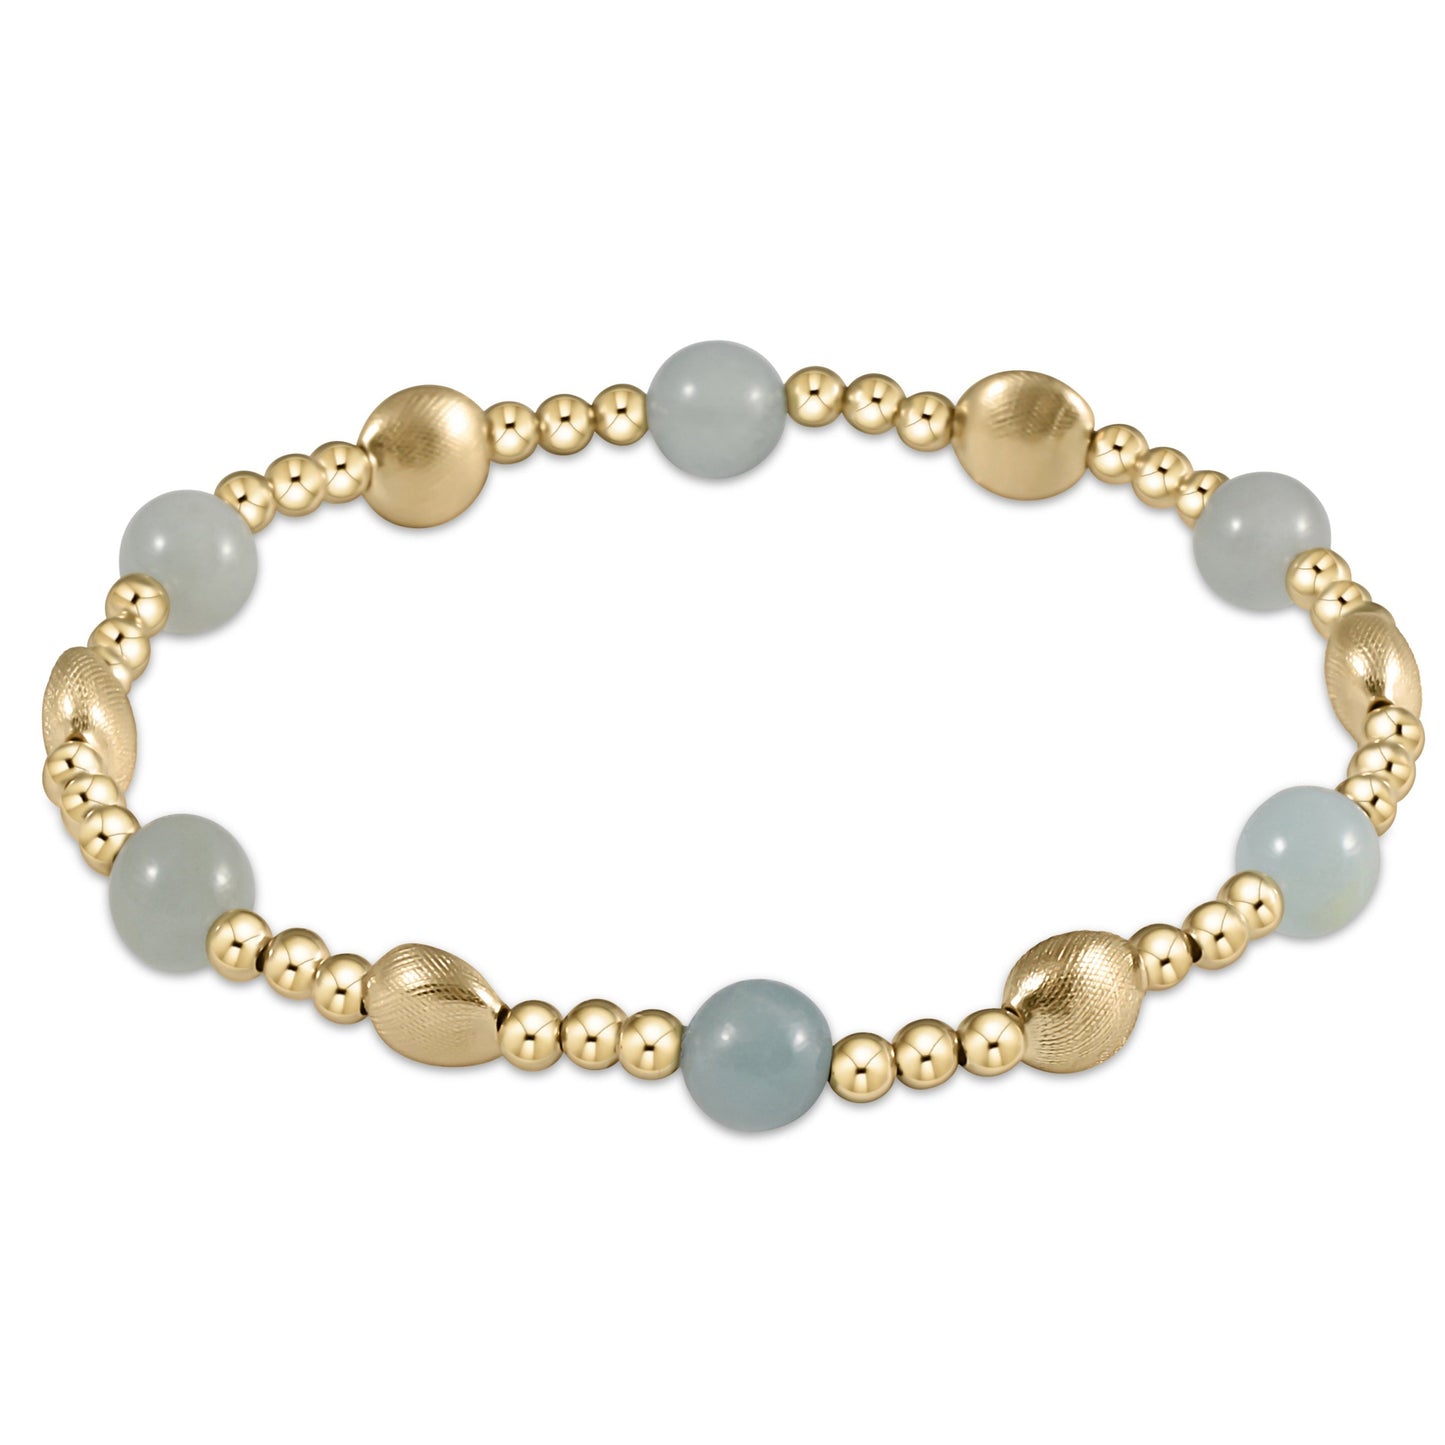 Honesty Gold Sincerity Pattern 6mm Bead Bracelet - Gemstone